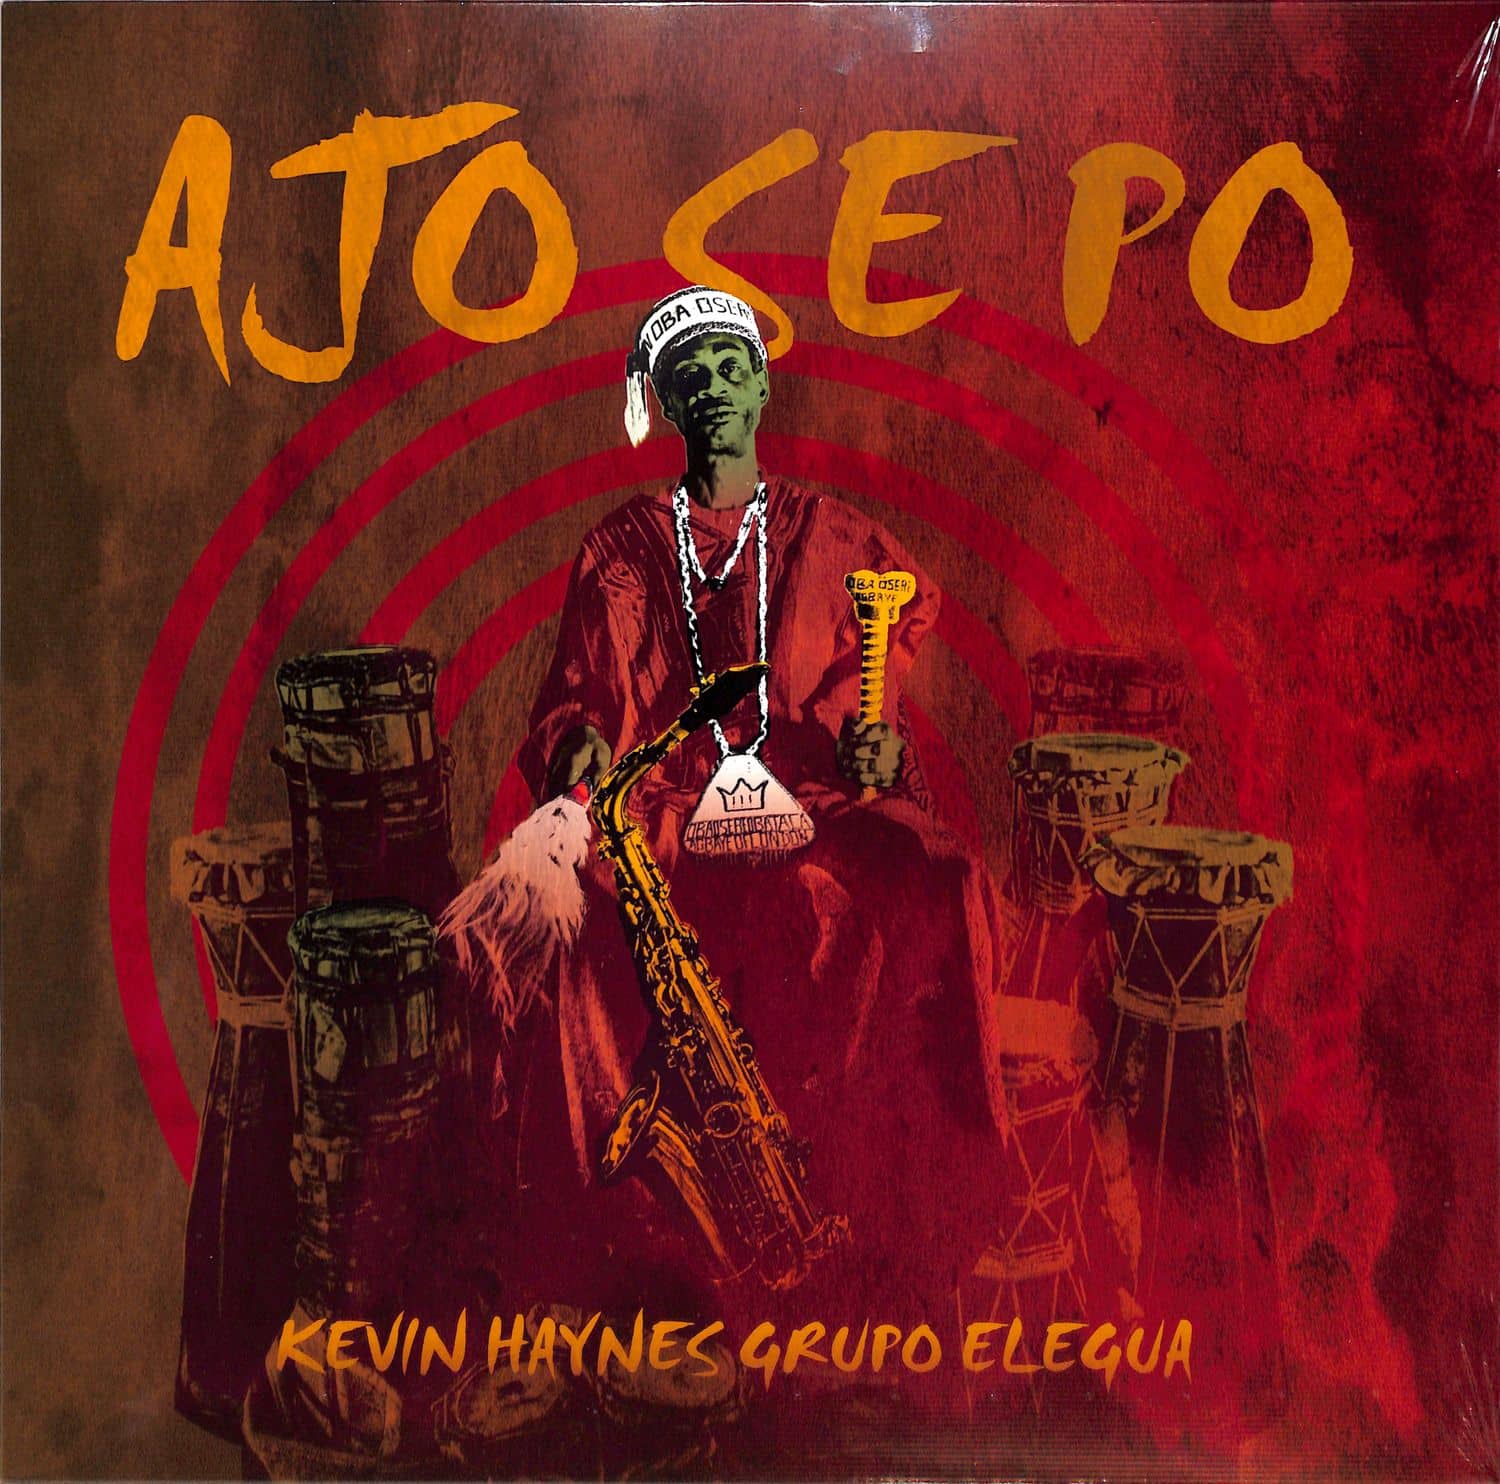 Kevin Haynes & Grupo Elegua - AJO SE PO 